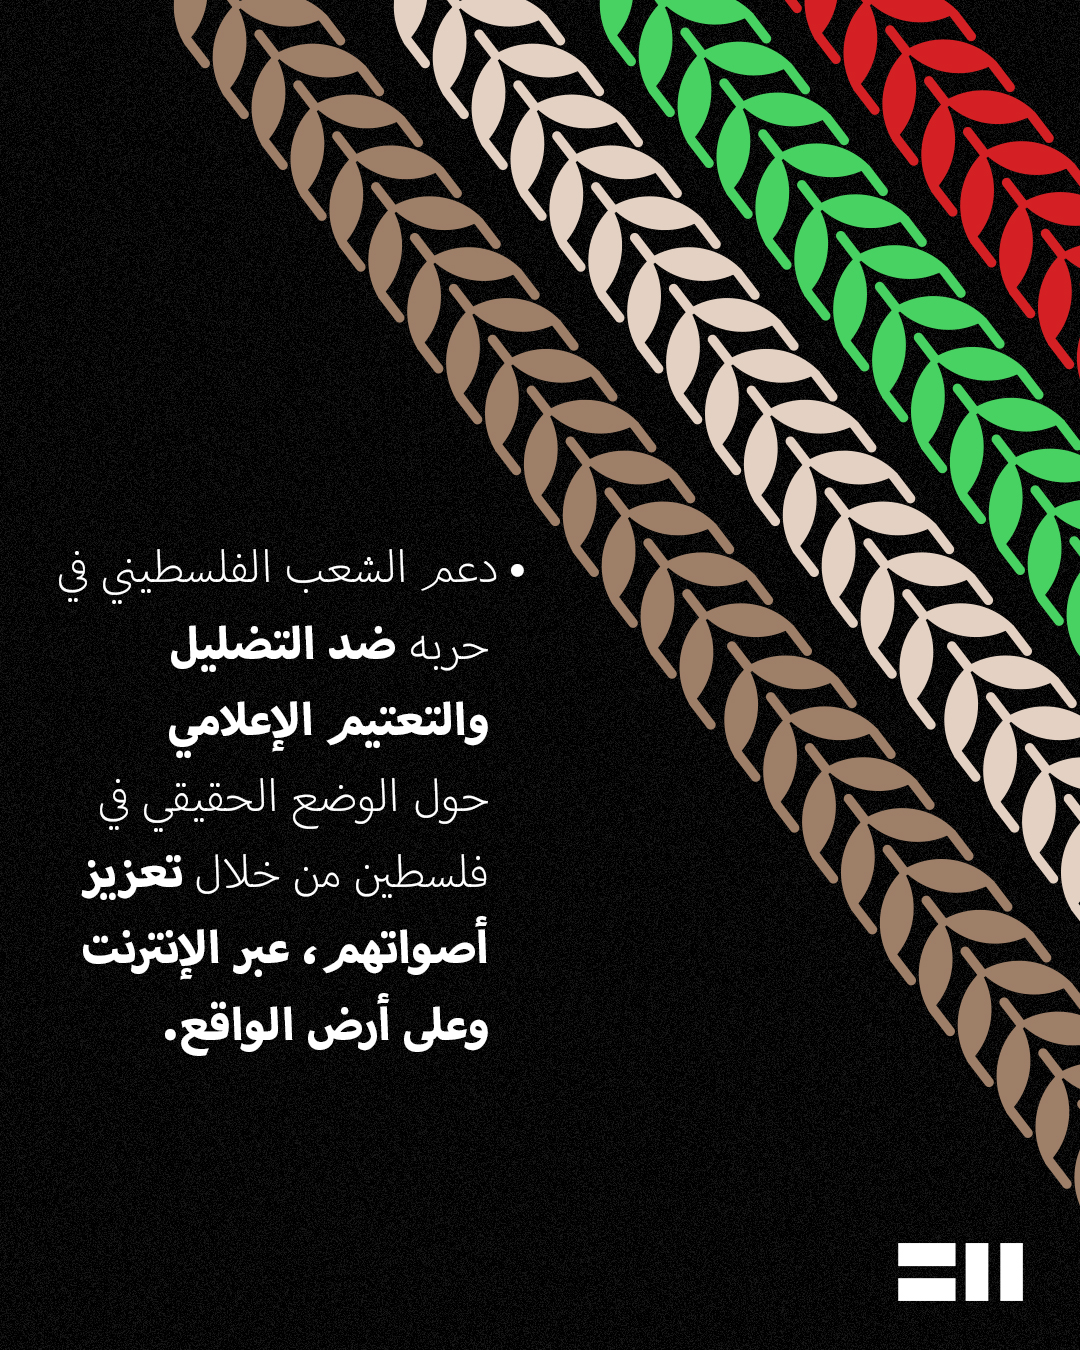 Arabic_Solidarity-with-Gaza-Poster-Design-19_05